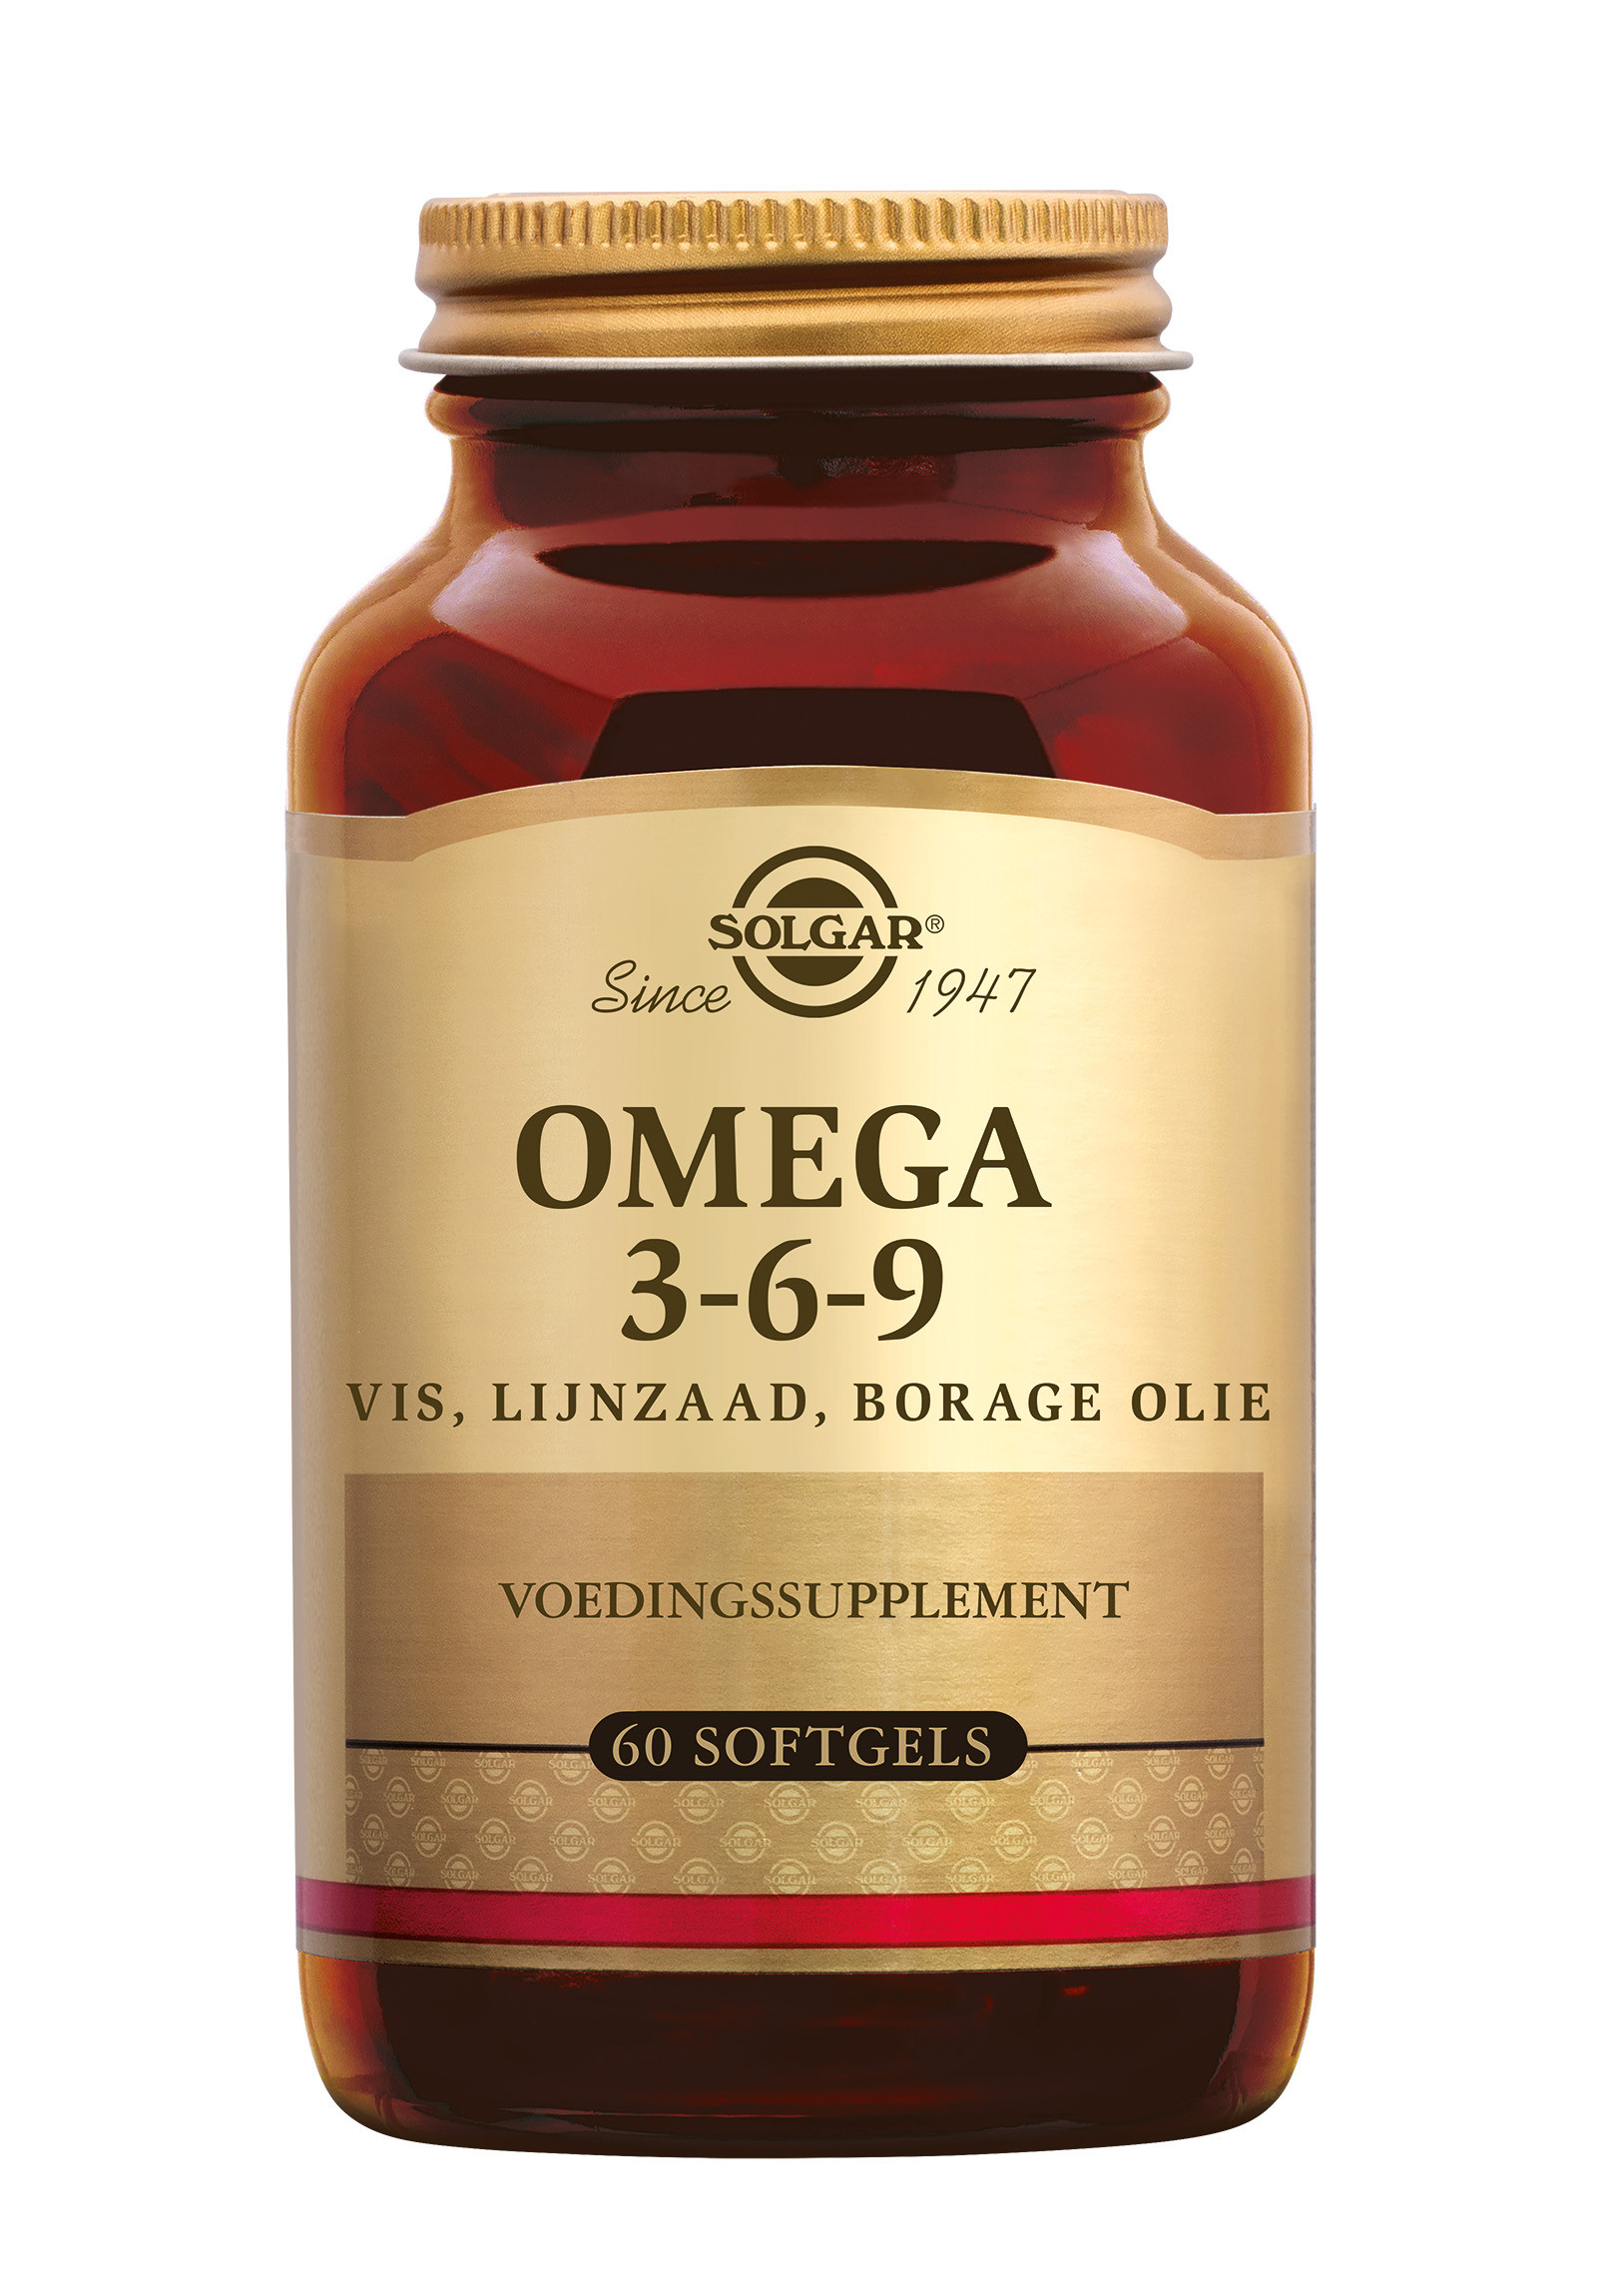 Solgar Omega 3-6-9